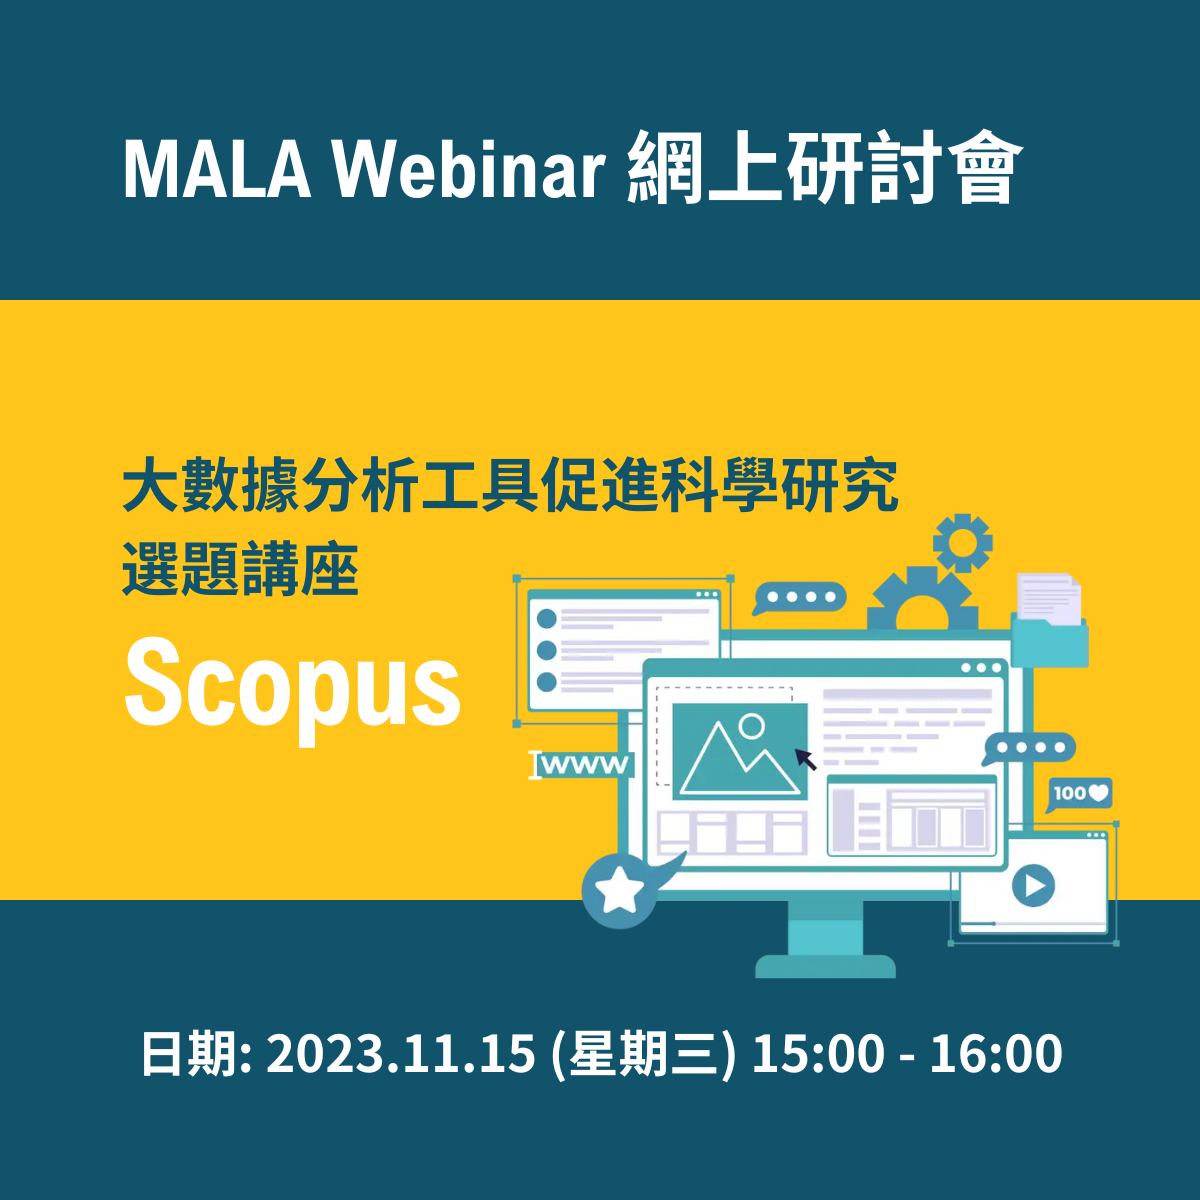 MALA Webinar 網上研討會: Scopus 大數據分析工具促進科學研究選題講座